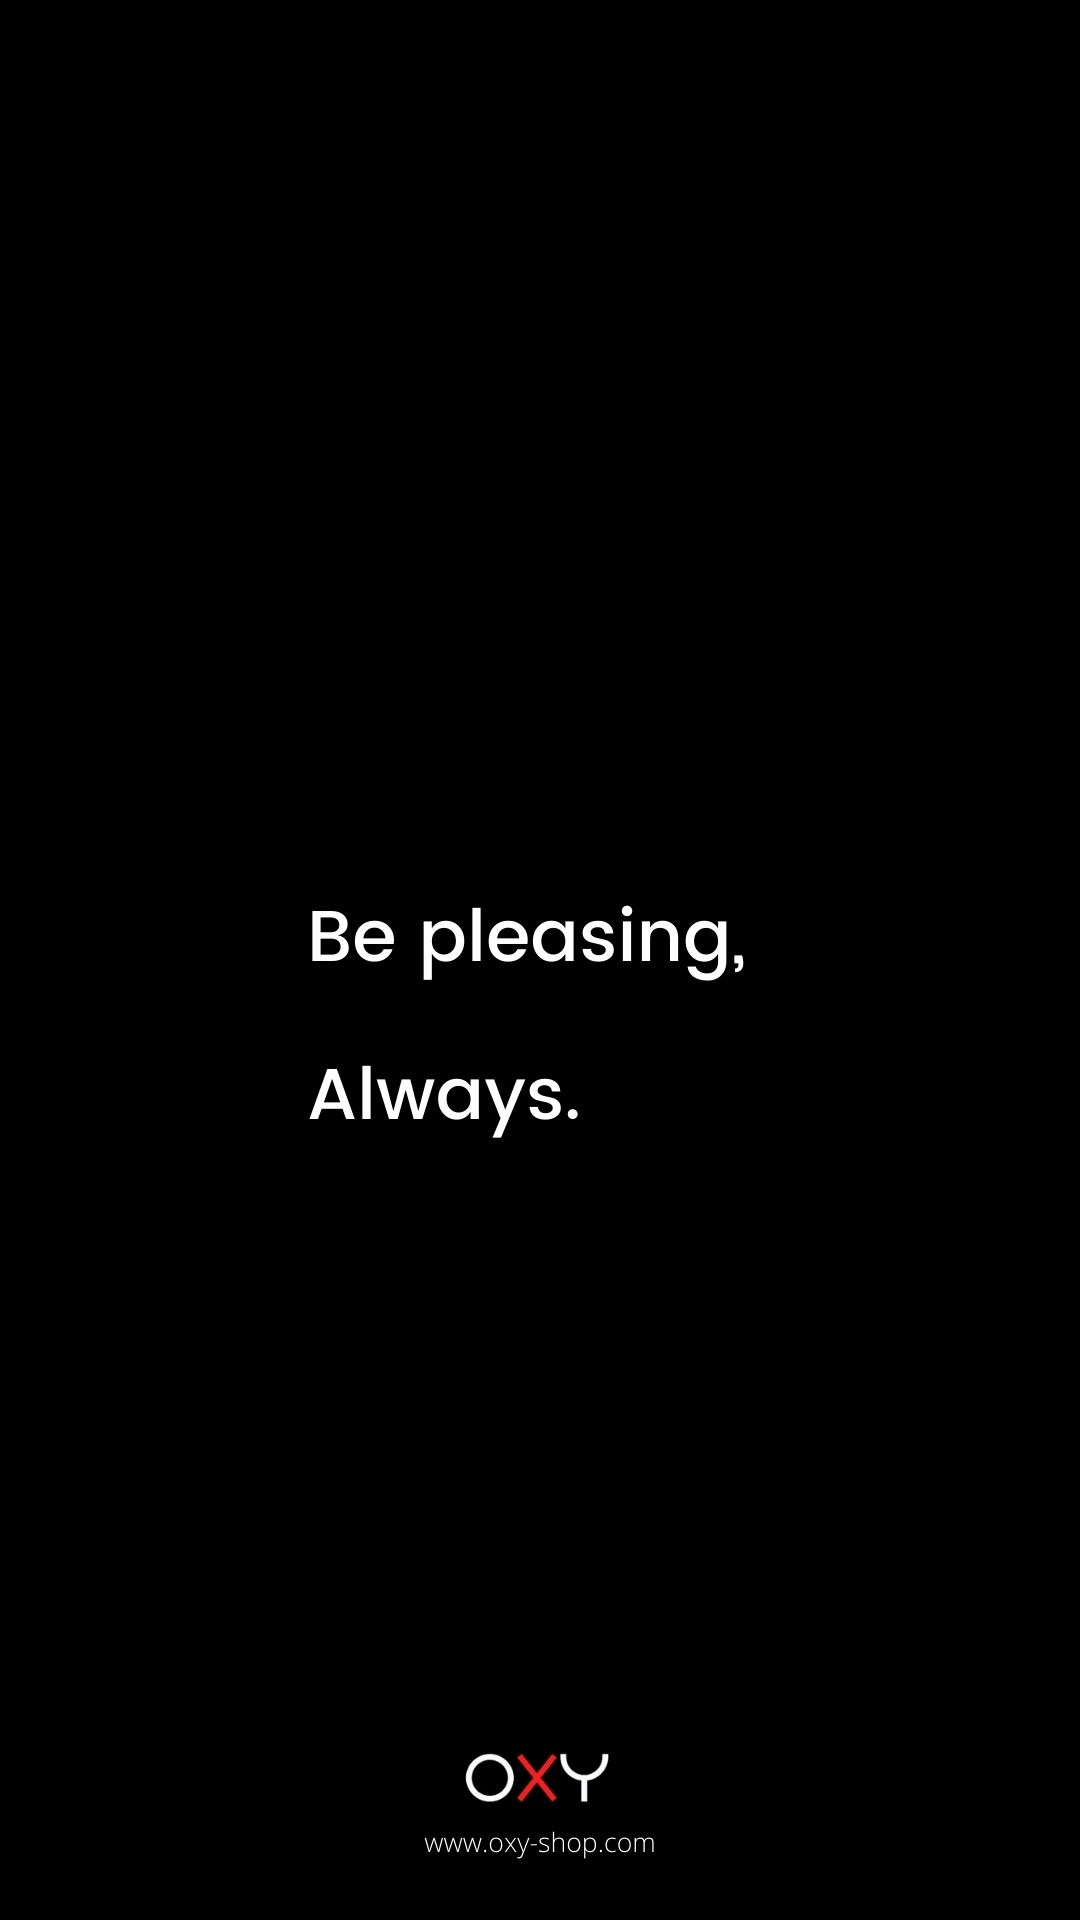 Be pleasing, always. - BDSM wallpaper